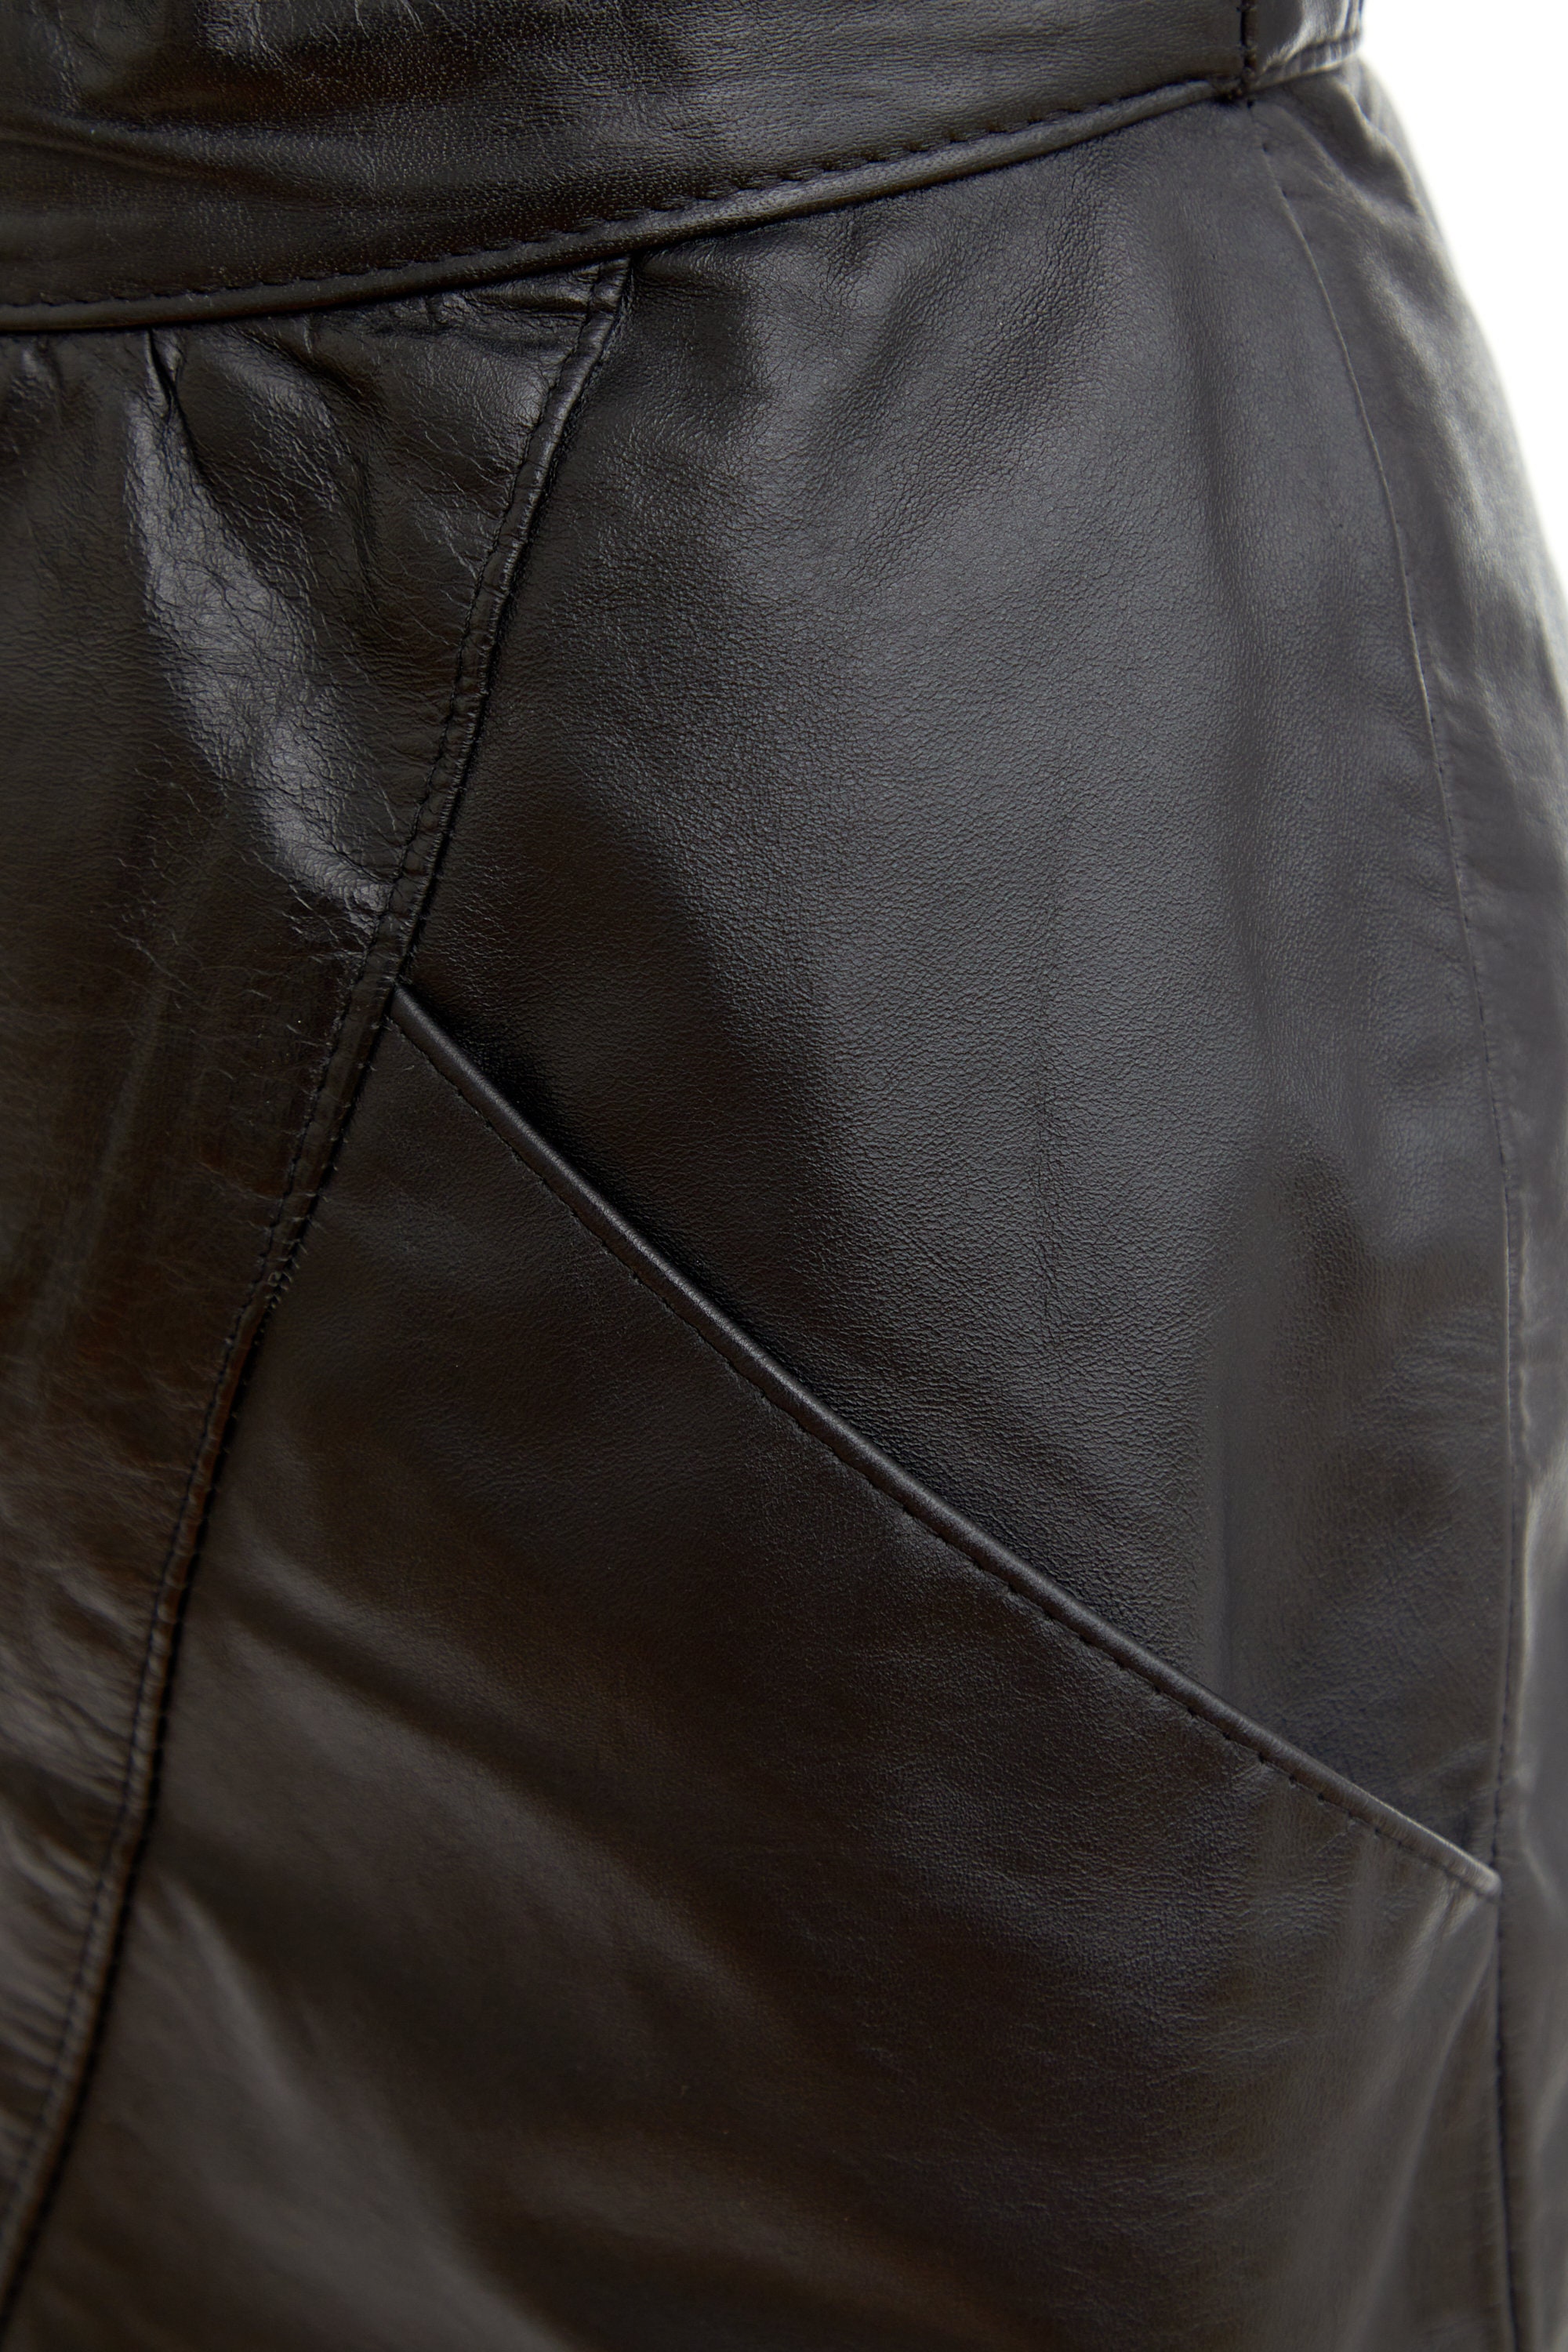 80's High Waist Black Leather Skirt / Midi Skirt approx - Etsy Canada